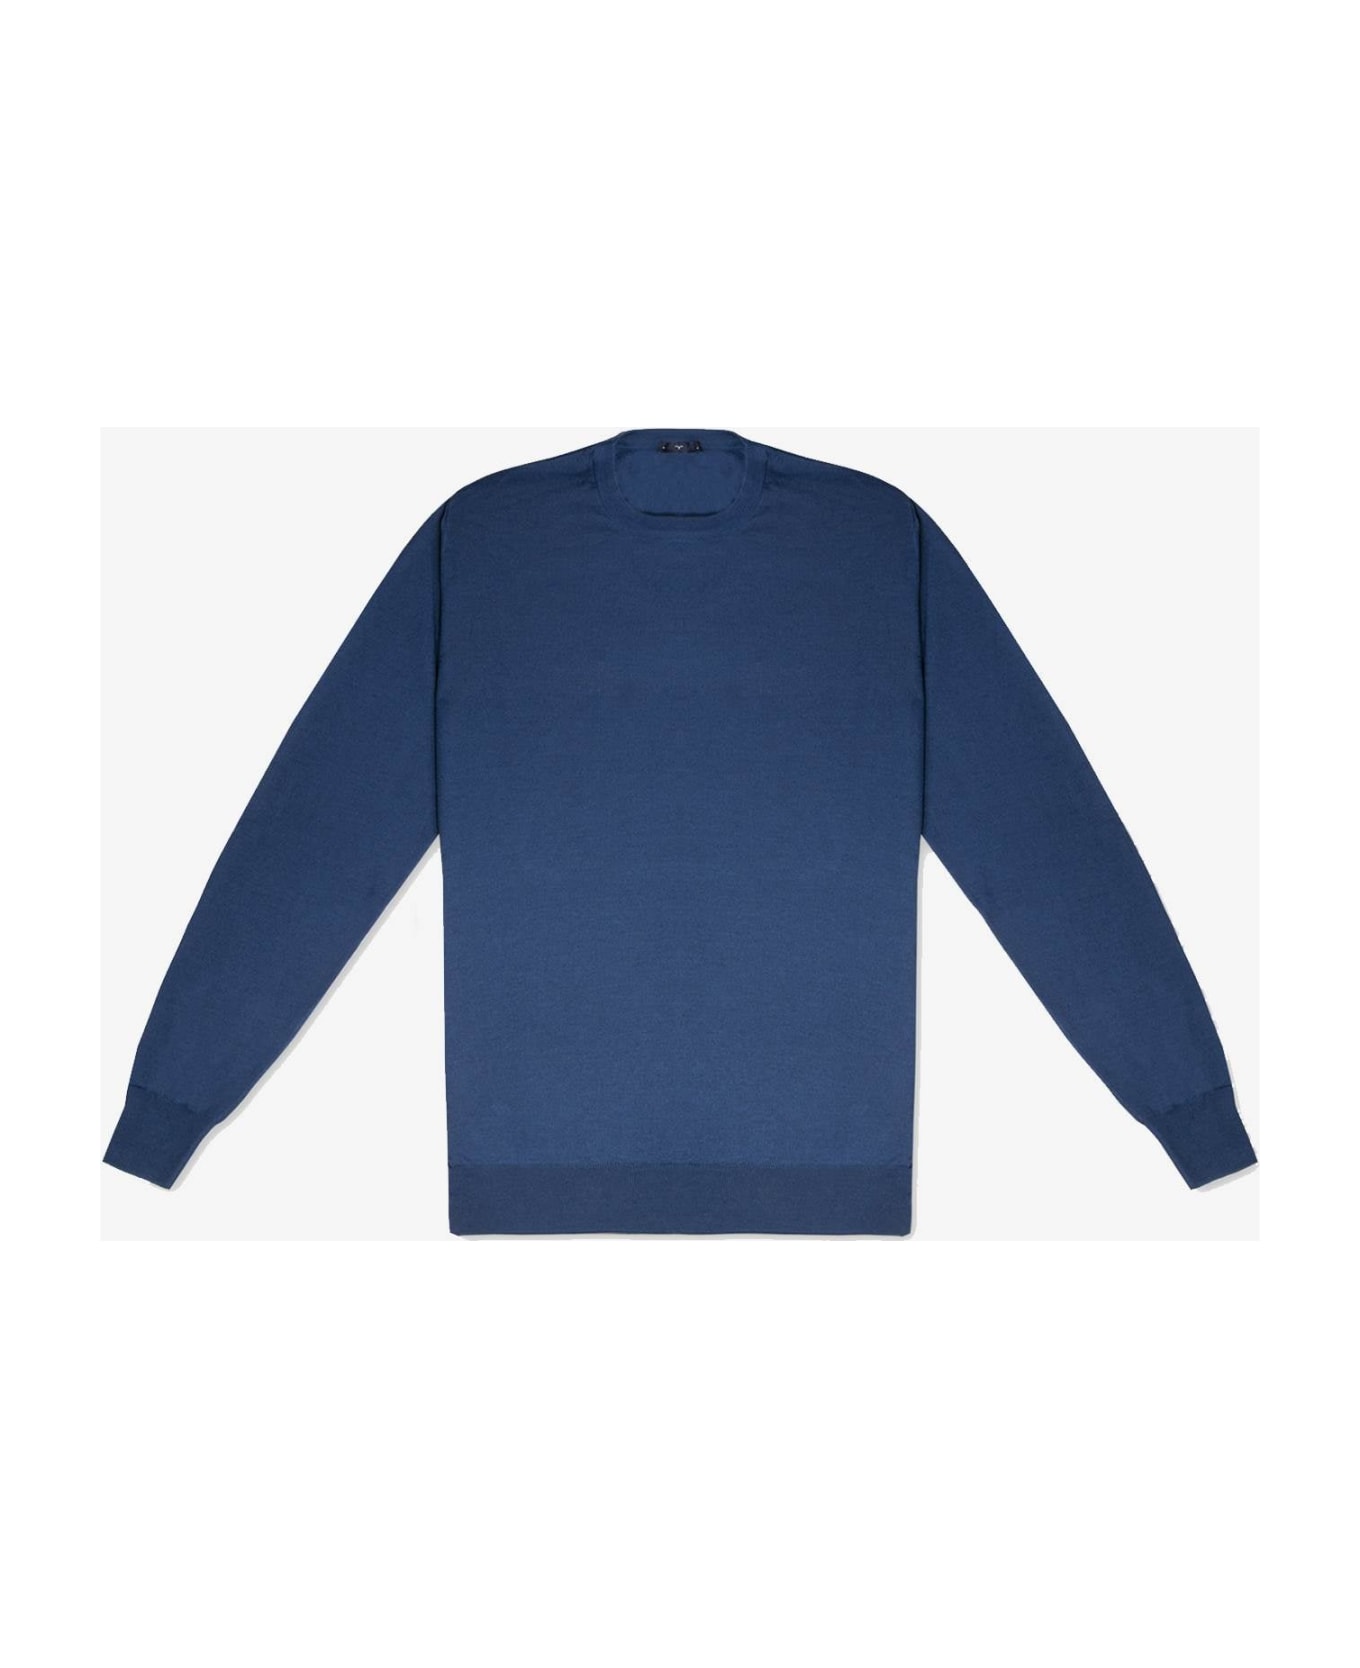 Larusmiani Sweater 'pullman' Sweater - Blue